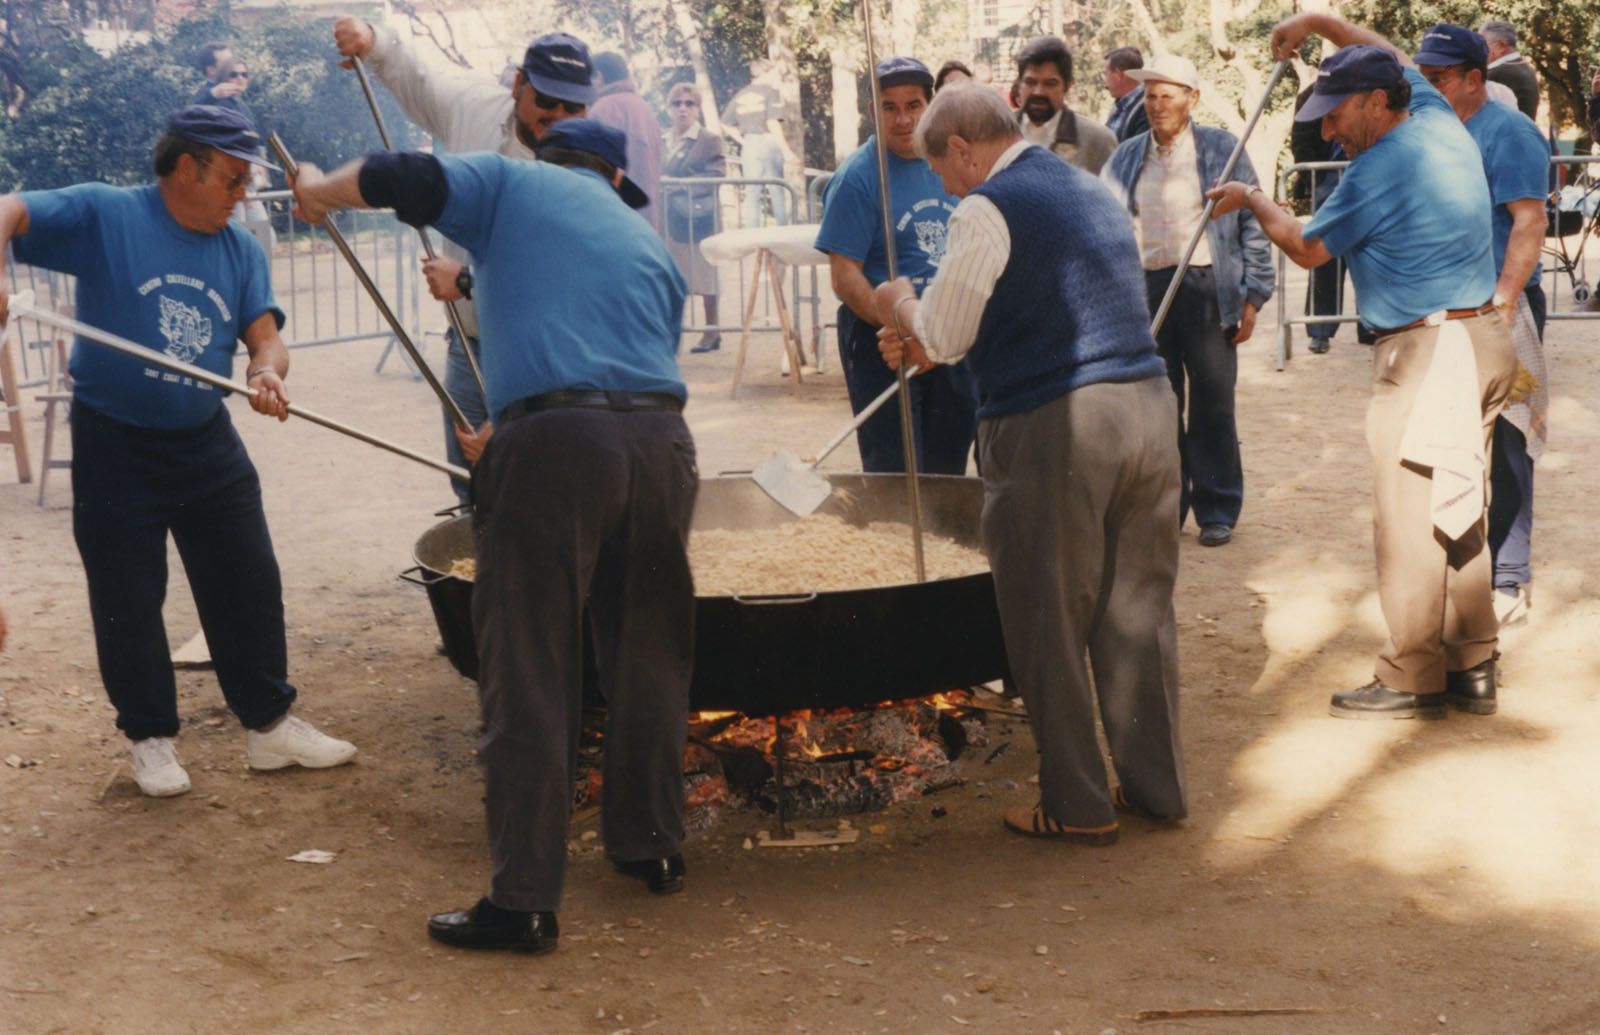 El Centro Castellano Manchego durant la preparació de les famoses Migas, 1997. FOTO: Mané Espinosa